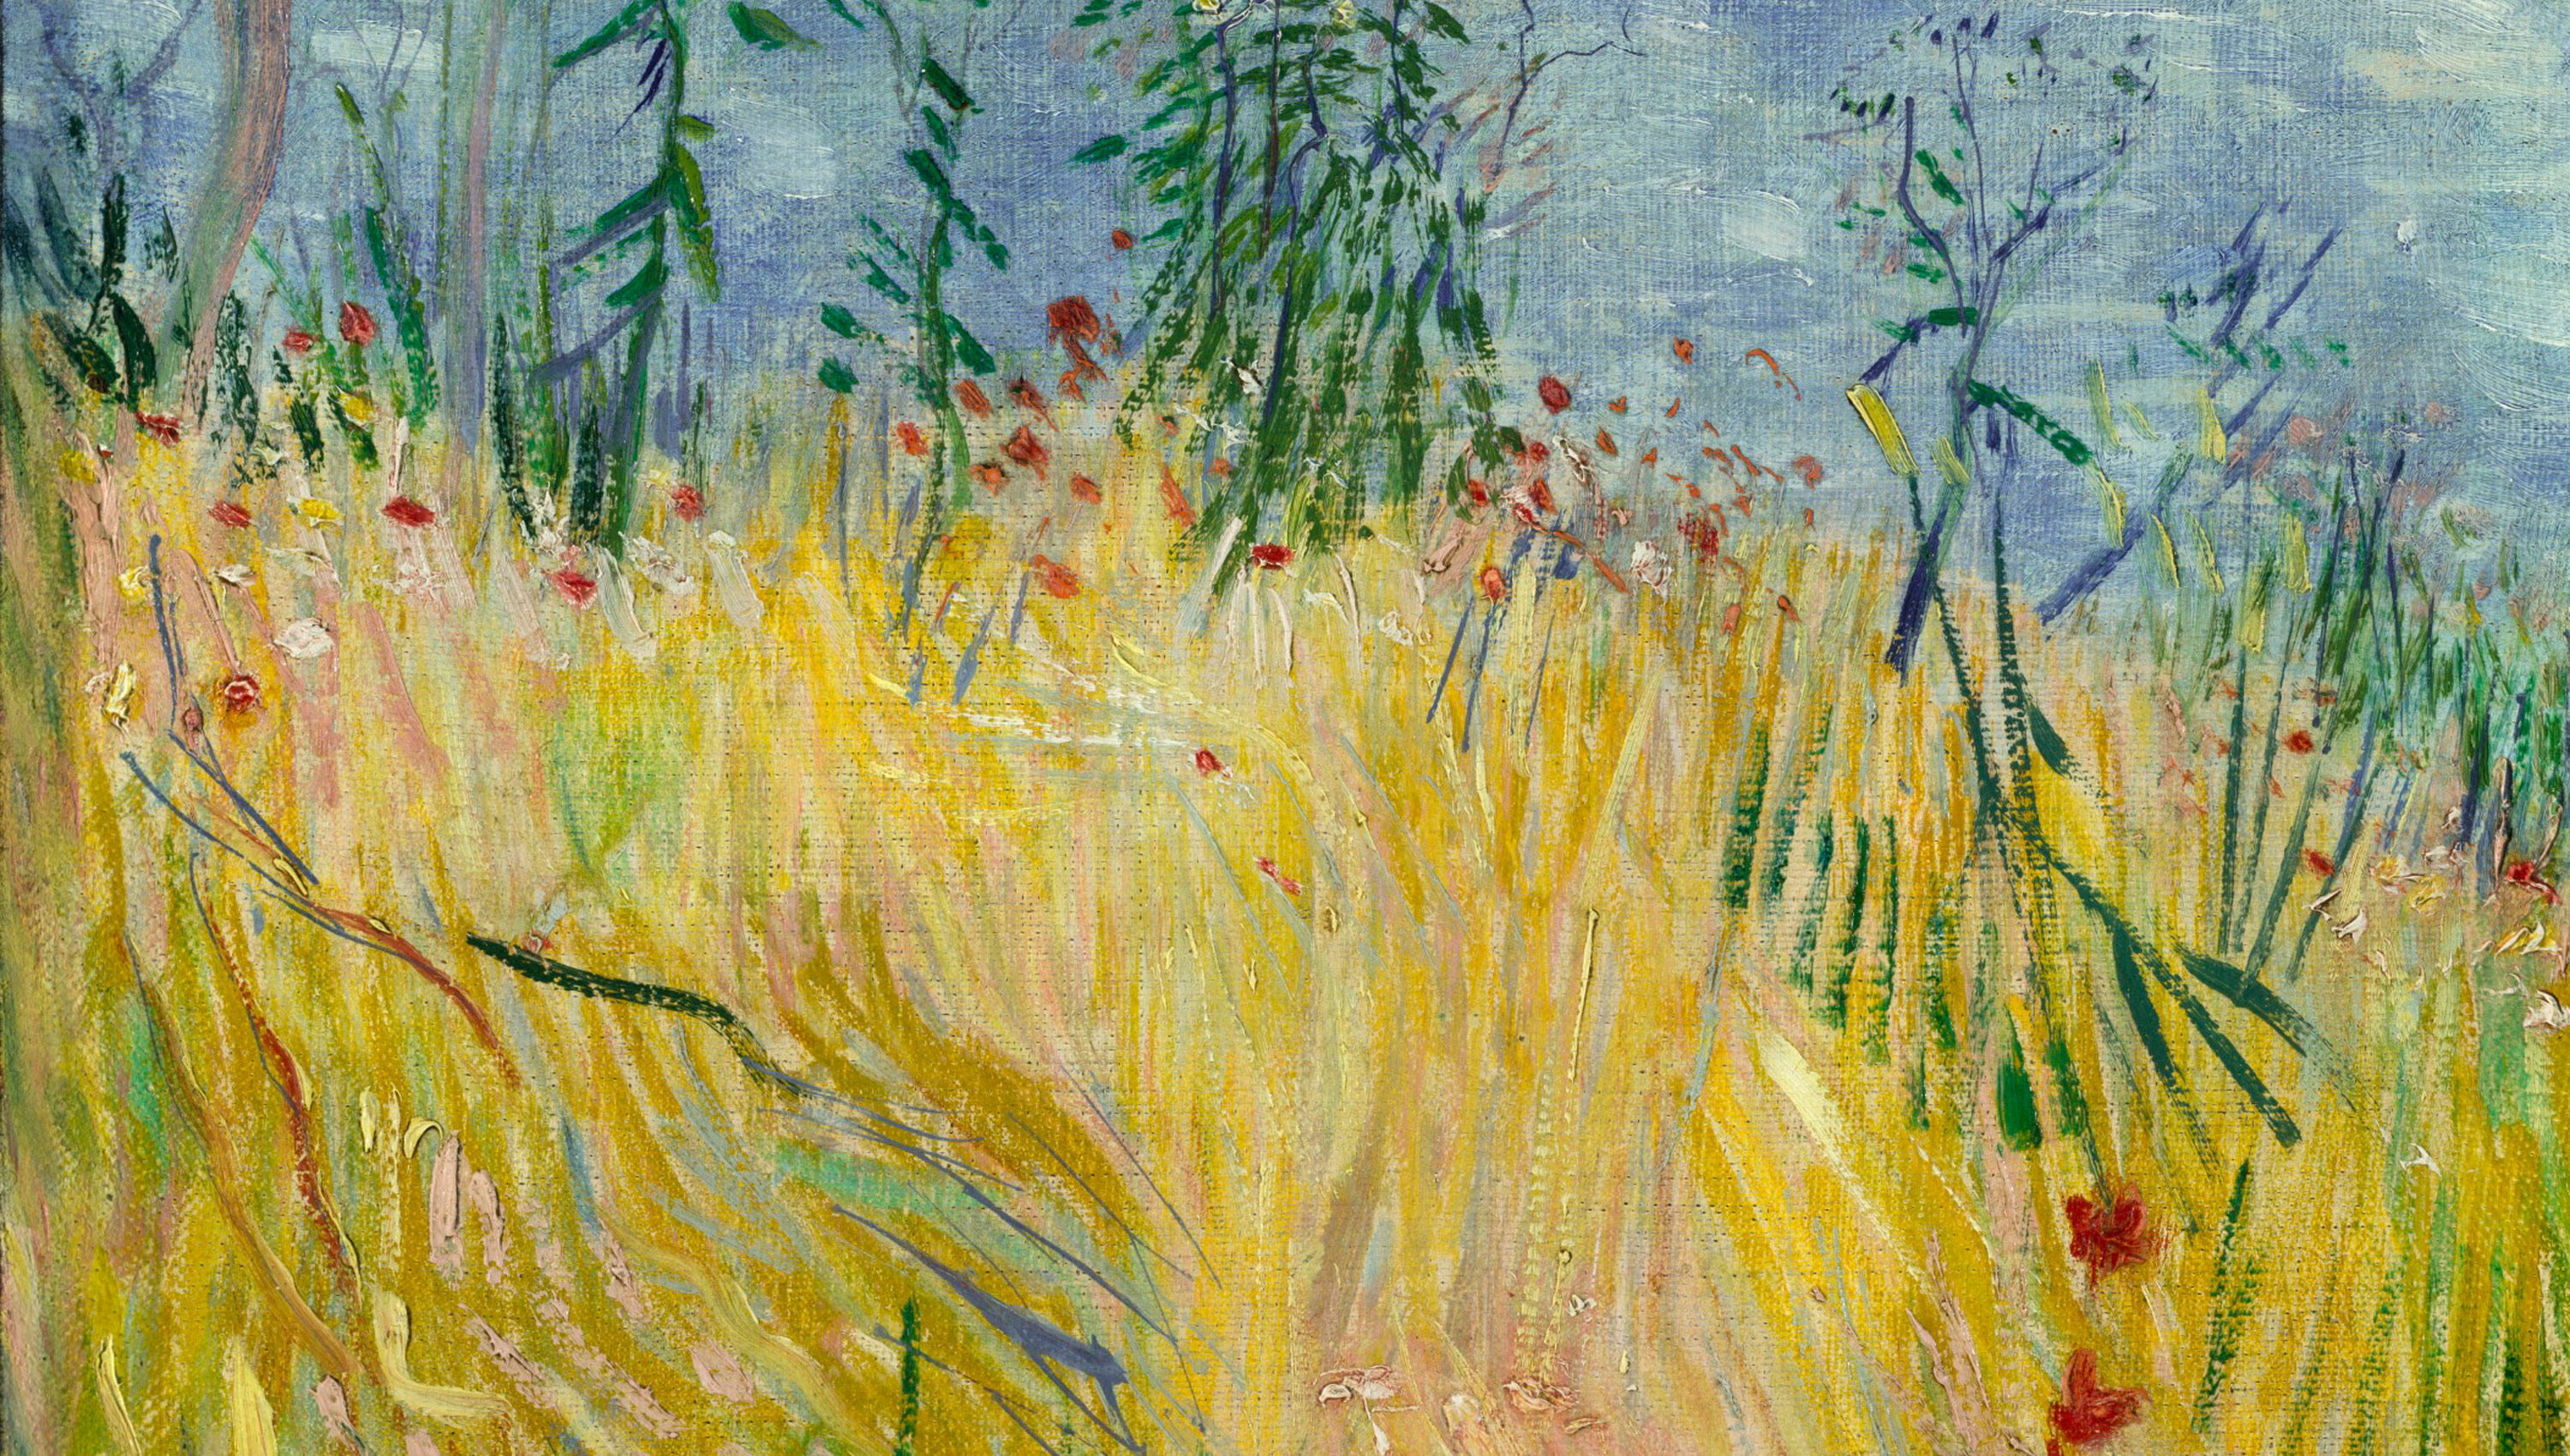 https://d26jxt5097u8sr.cloudfront.net/s3fs-public/2021-04/Vincent-van-Gogh%2C-Edge-of-Wheat-Field-with-Poppies_blog-header_4.jpg